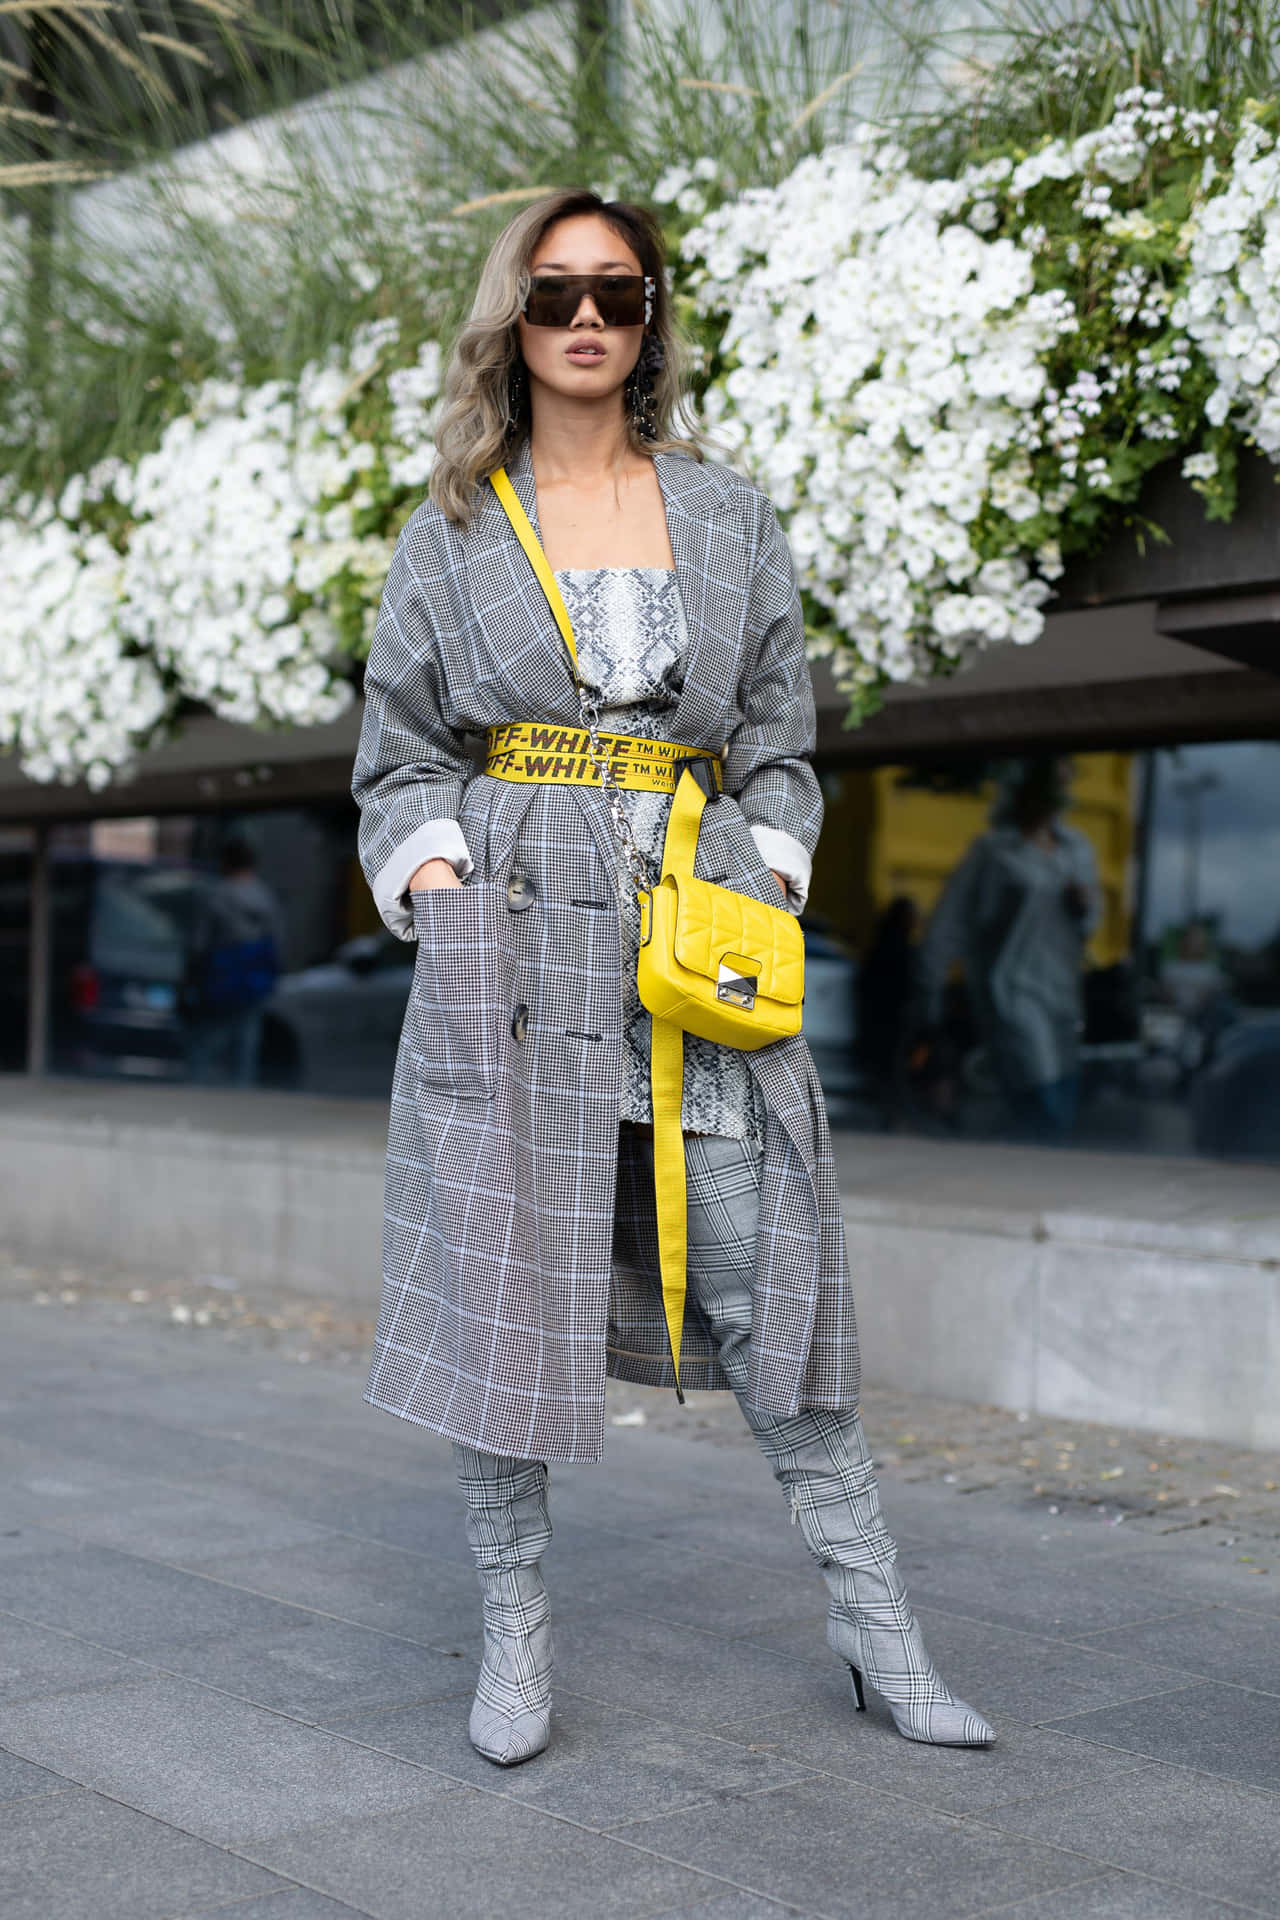 En kvinde i grå frakke og gul taske.